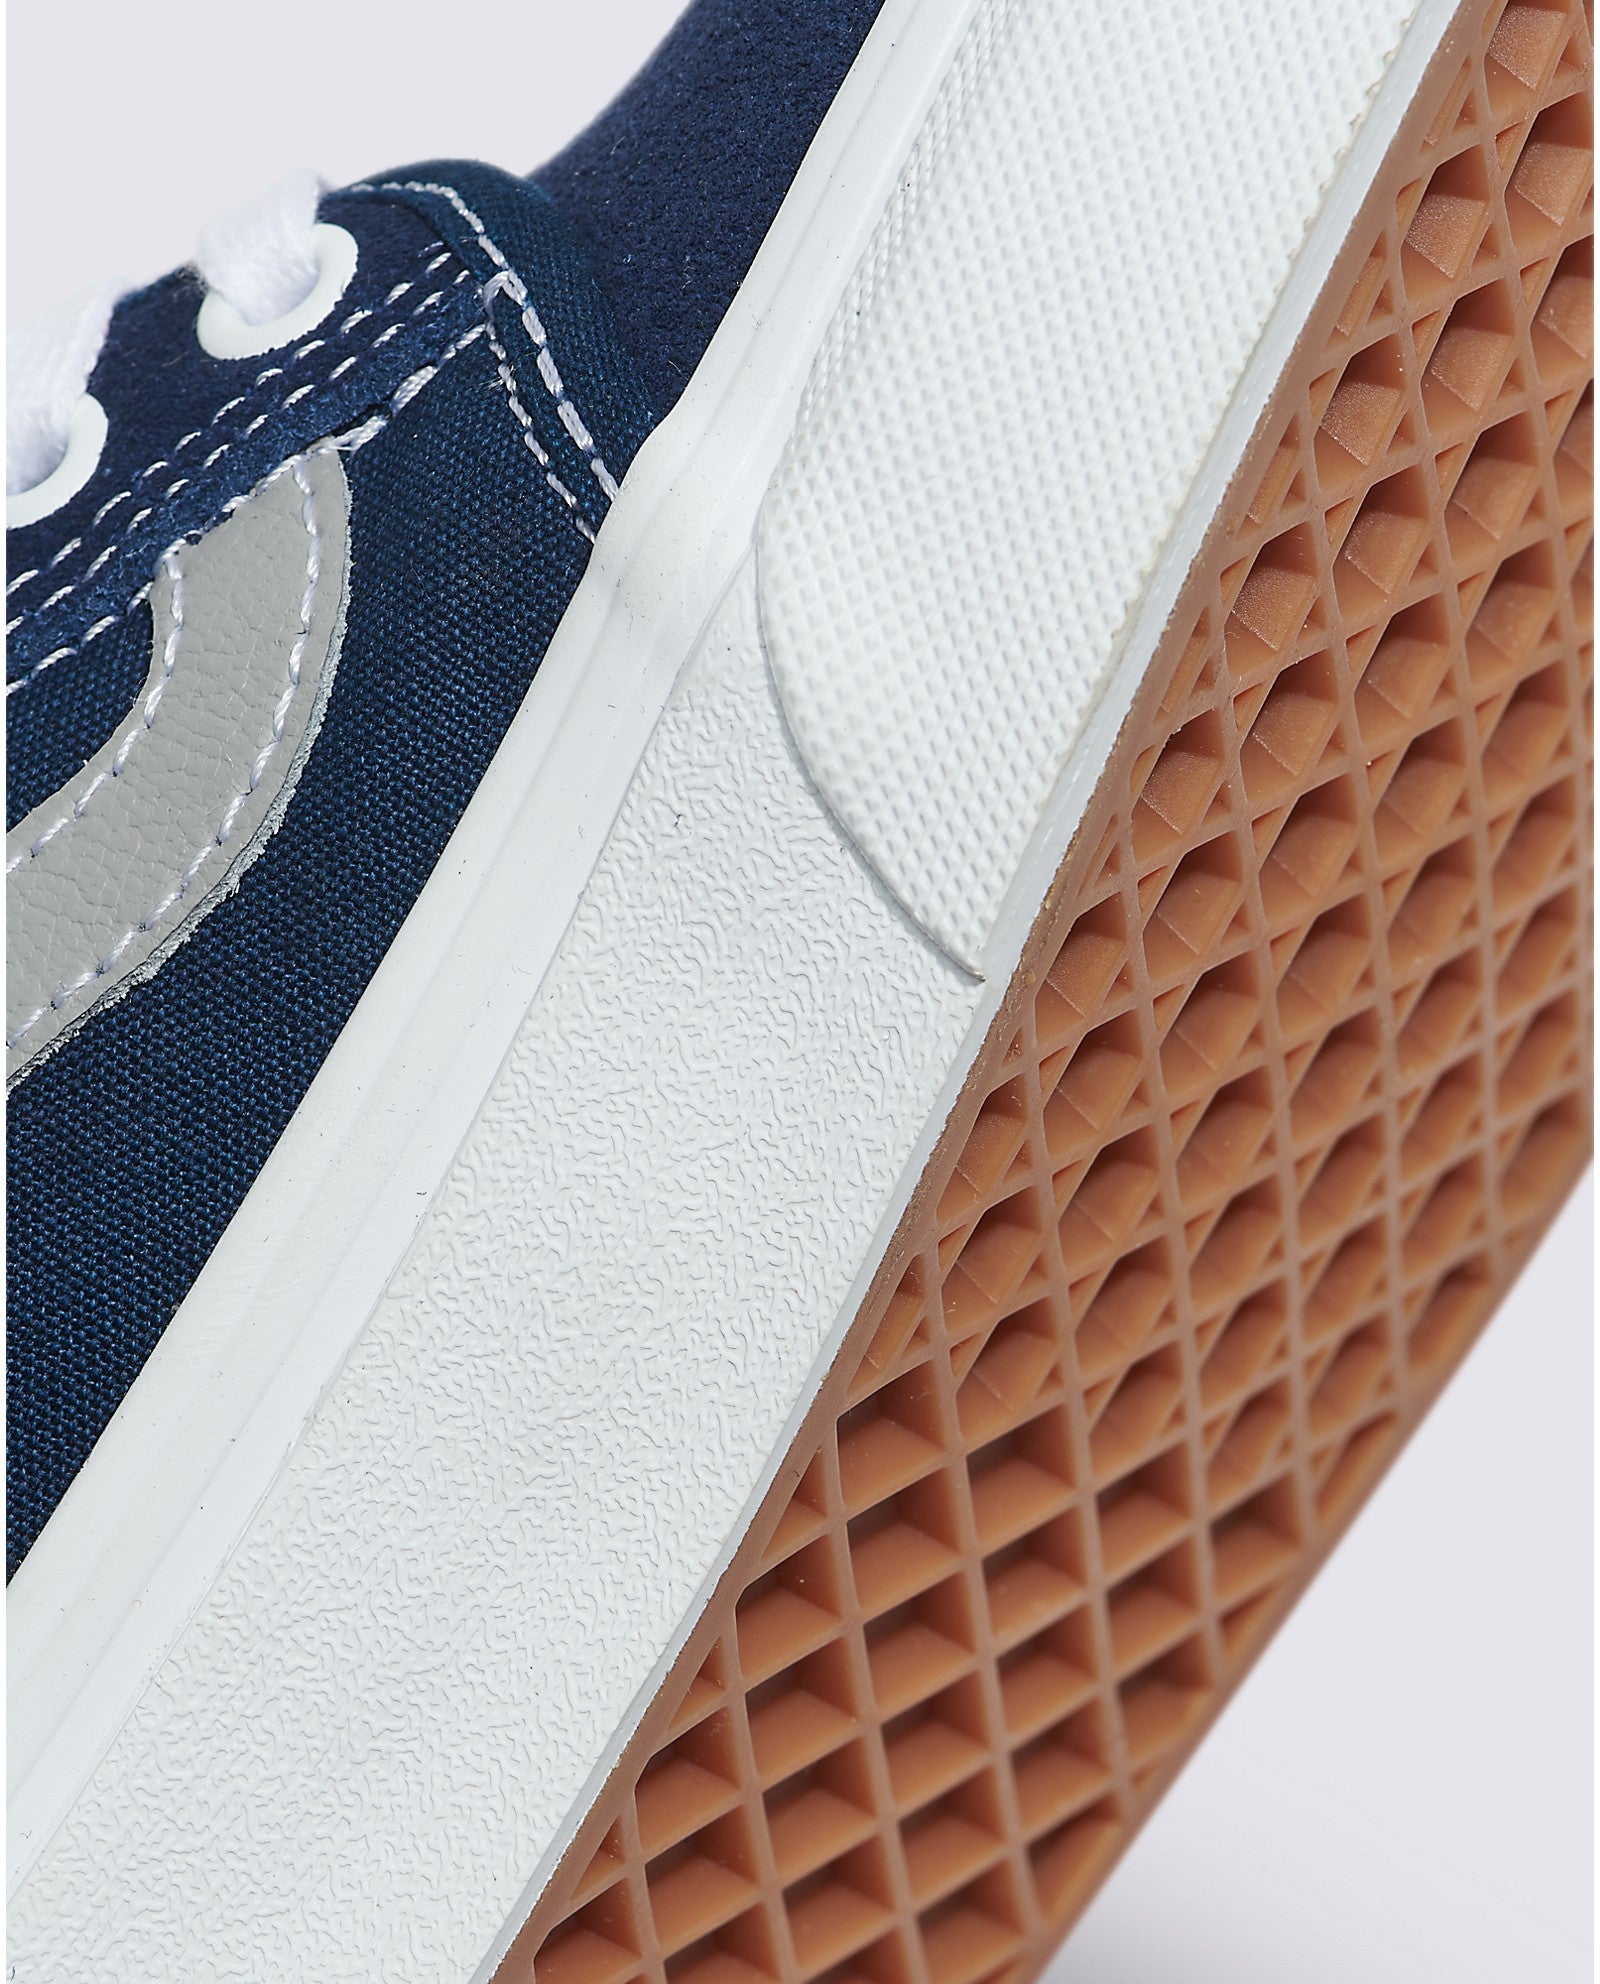 Navy/Grey Chukka Low Sidestripe Vans Skate Shoe Detail